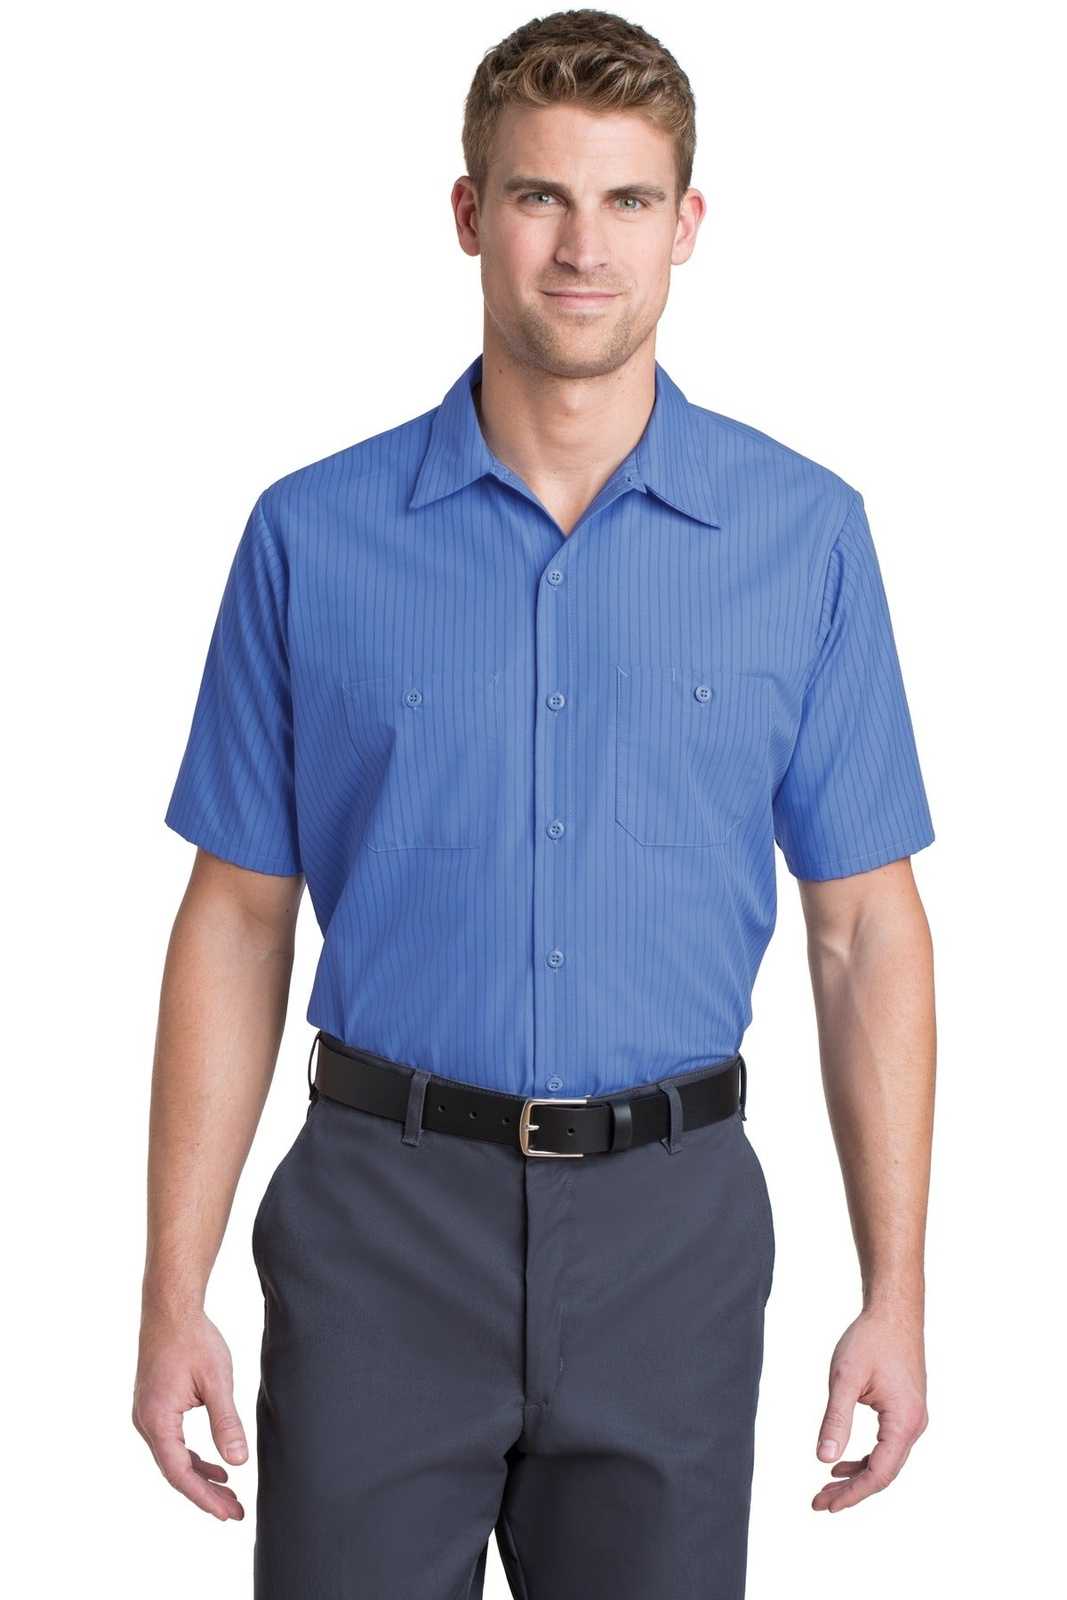 Red Kap CS20 Short Sleeve Striped Industrial Work Shirt - Petrol Blue/ Navy - HIT a Double - 1